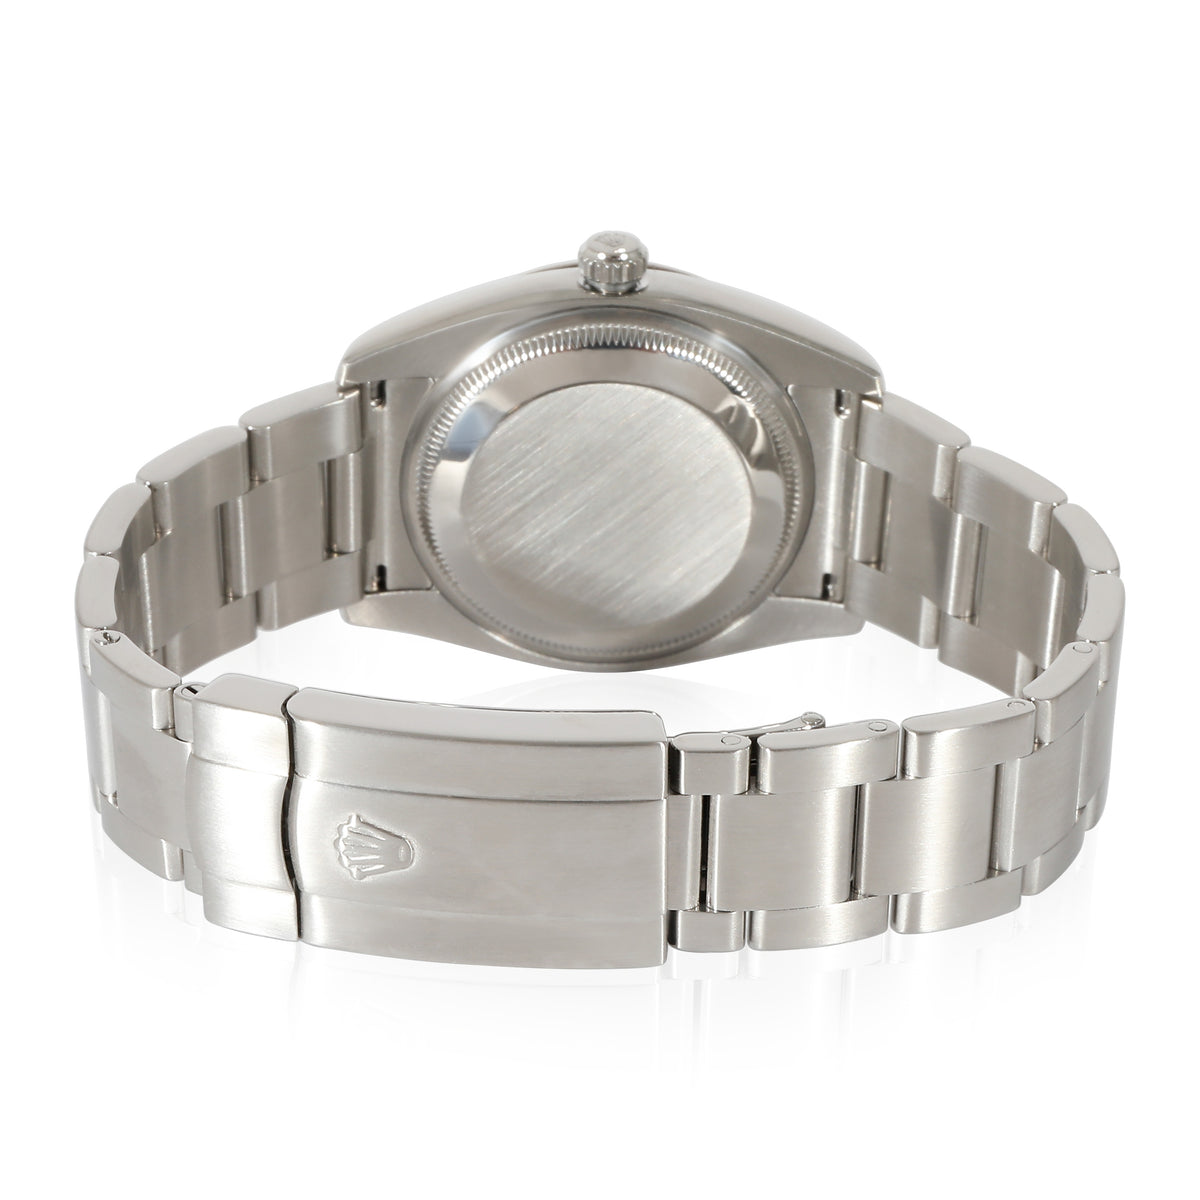 Rolex Date 115234 Unisex Watch in  Stainless Steel